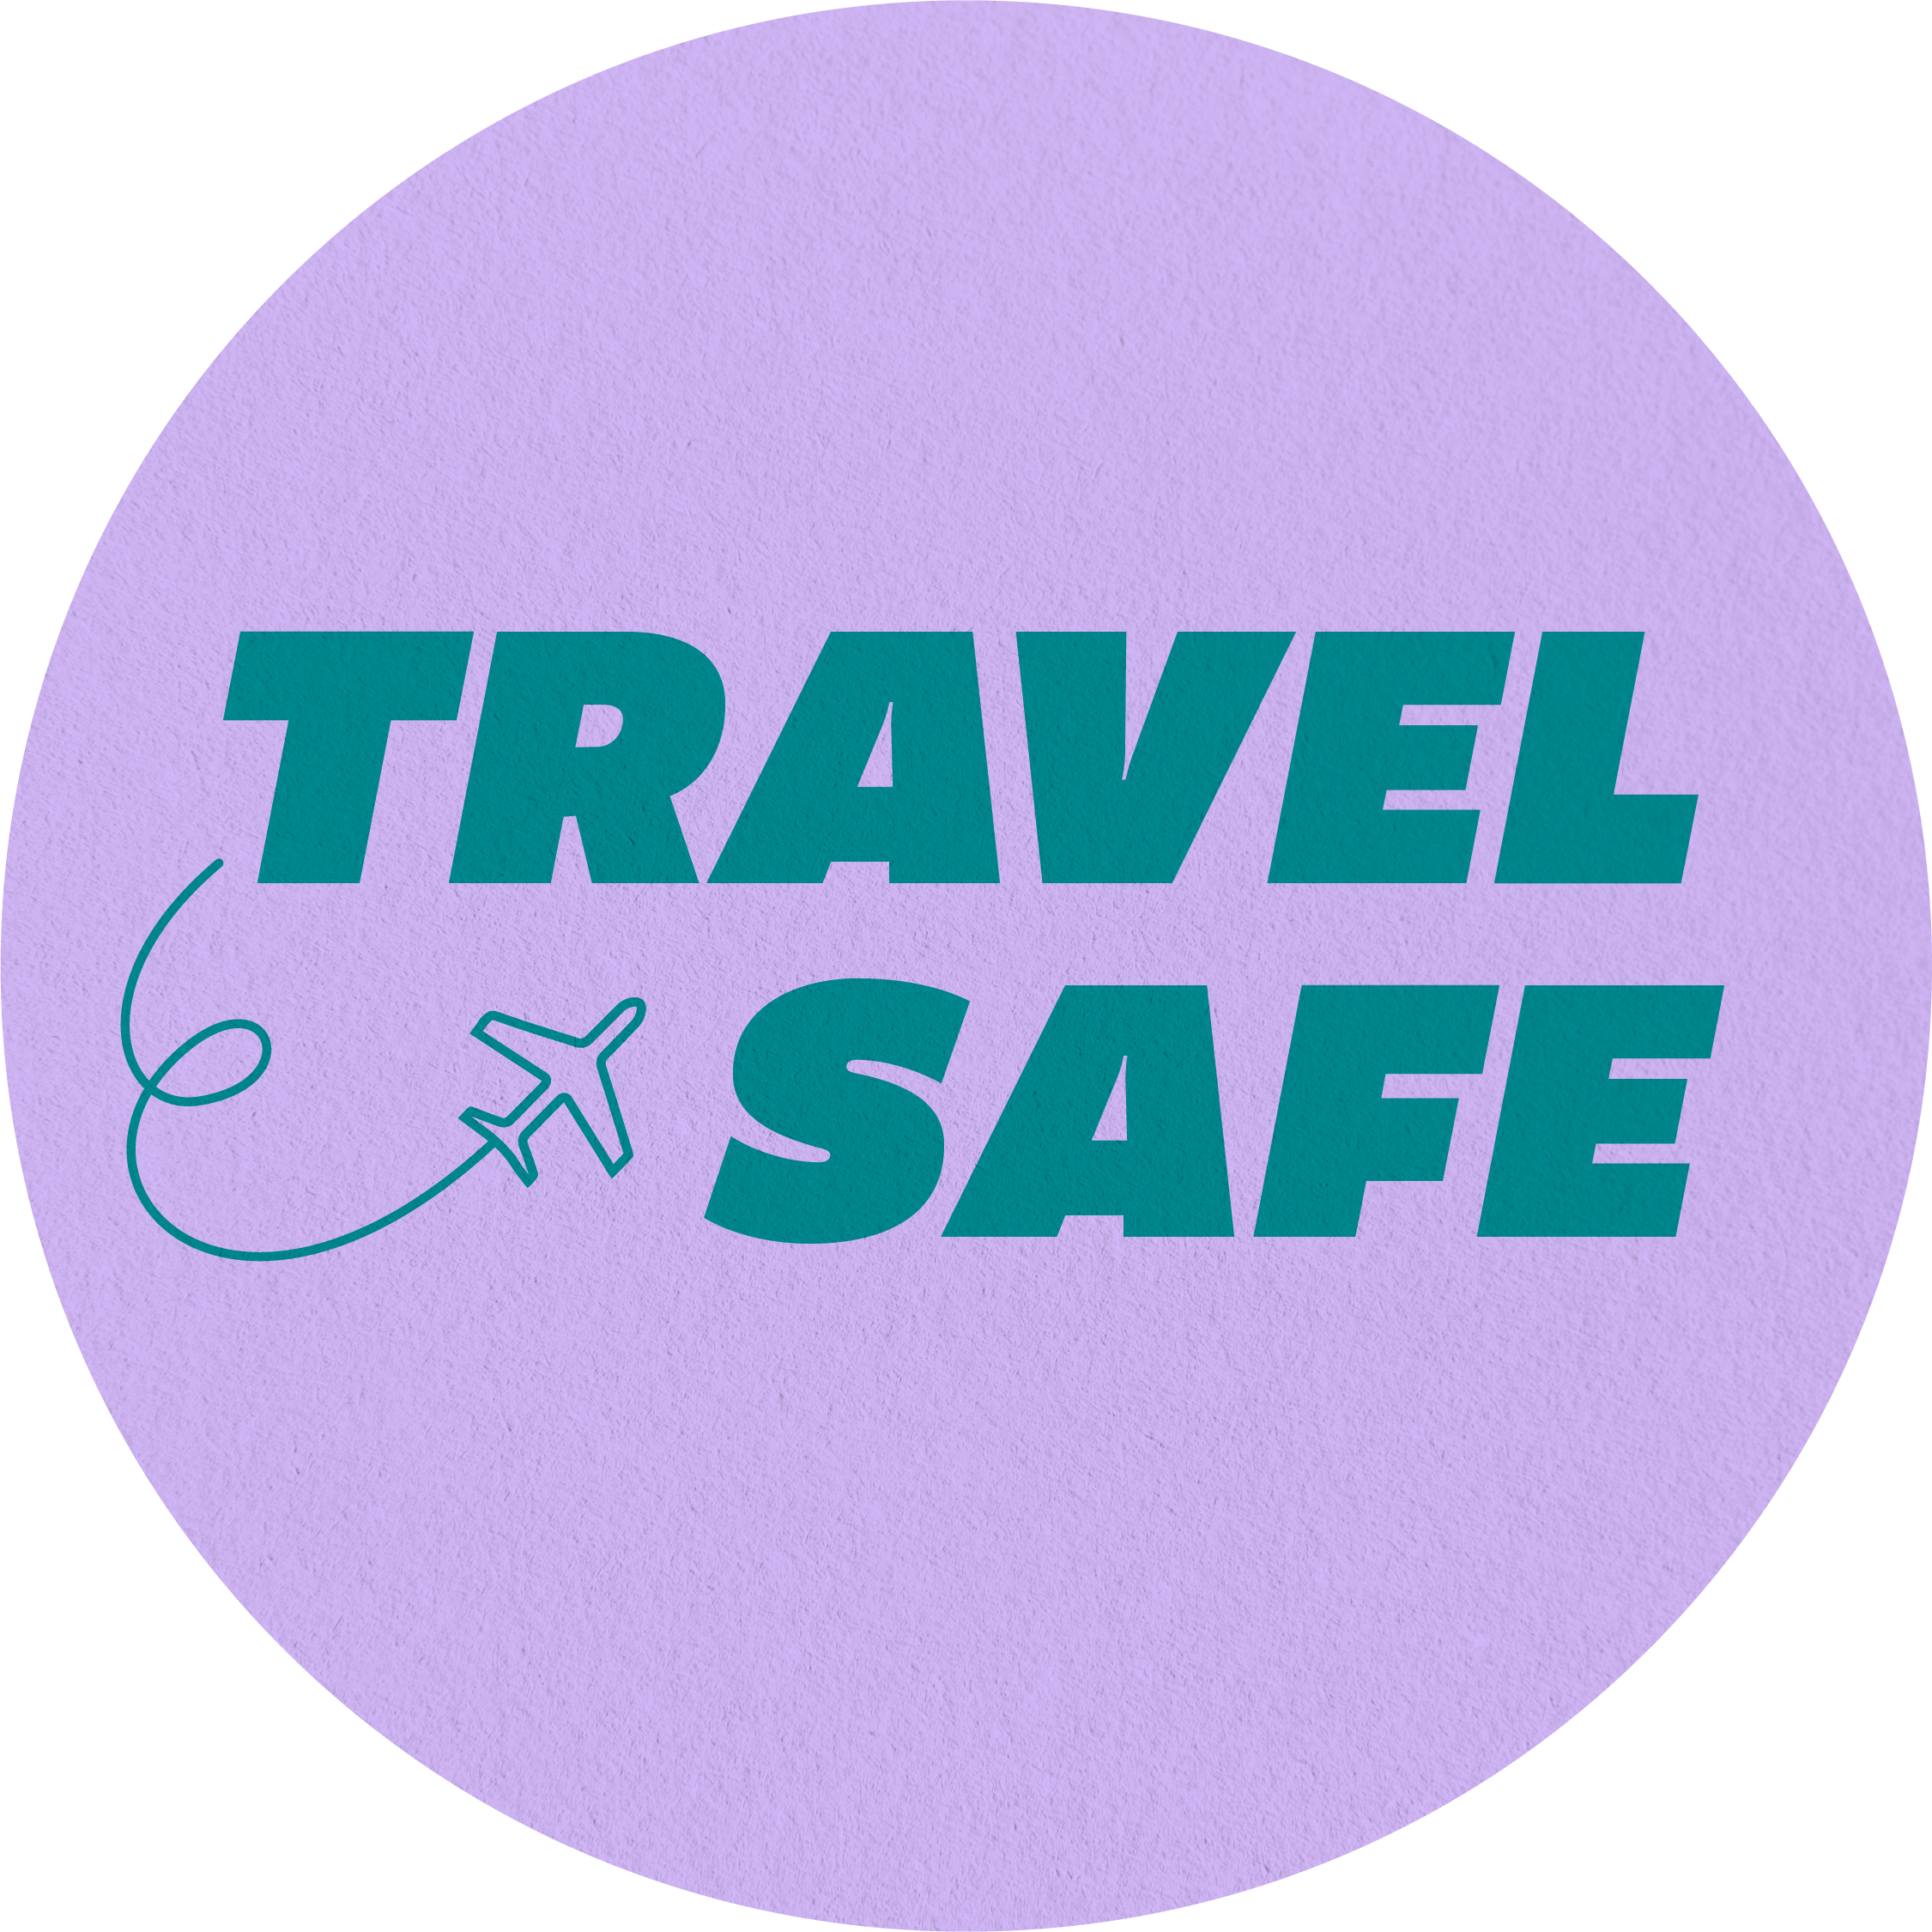 Illustrated lettering of "travel safe" on purple background.